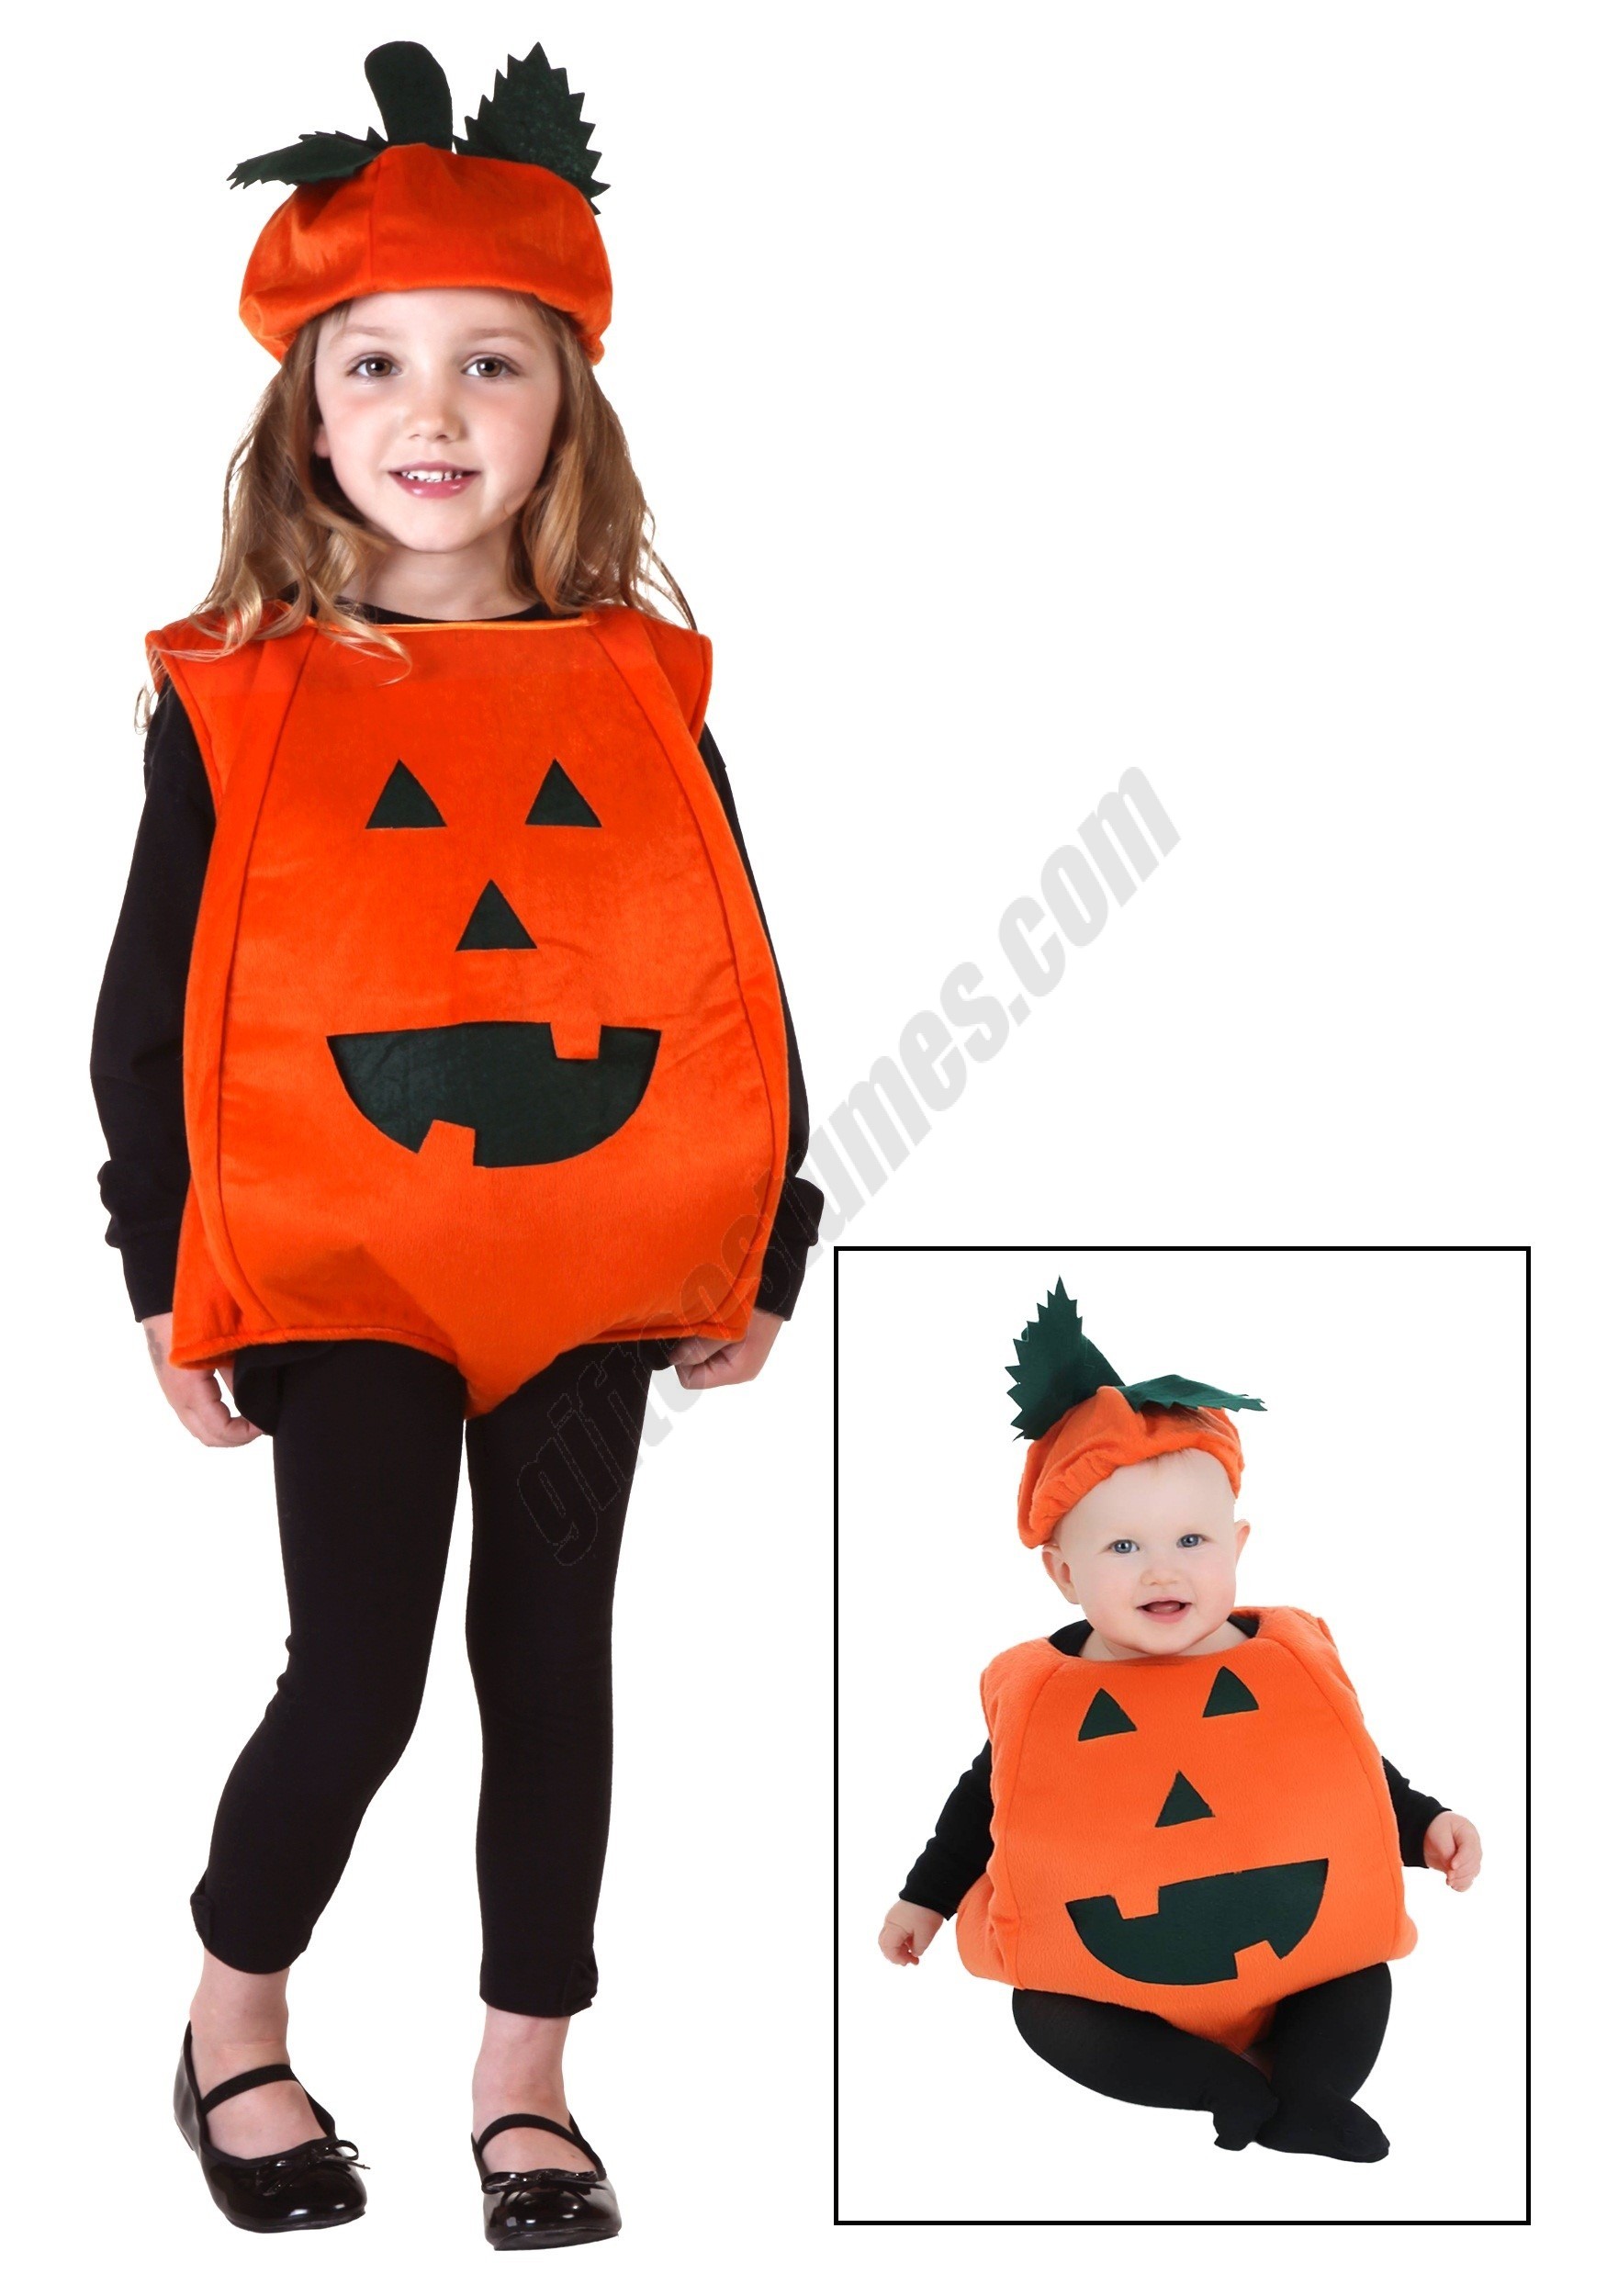 Toddler Orange Pumpkin Costume Promotions - Toddler Orange Pumpkin Costume Promotions